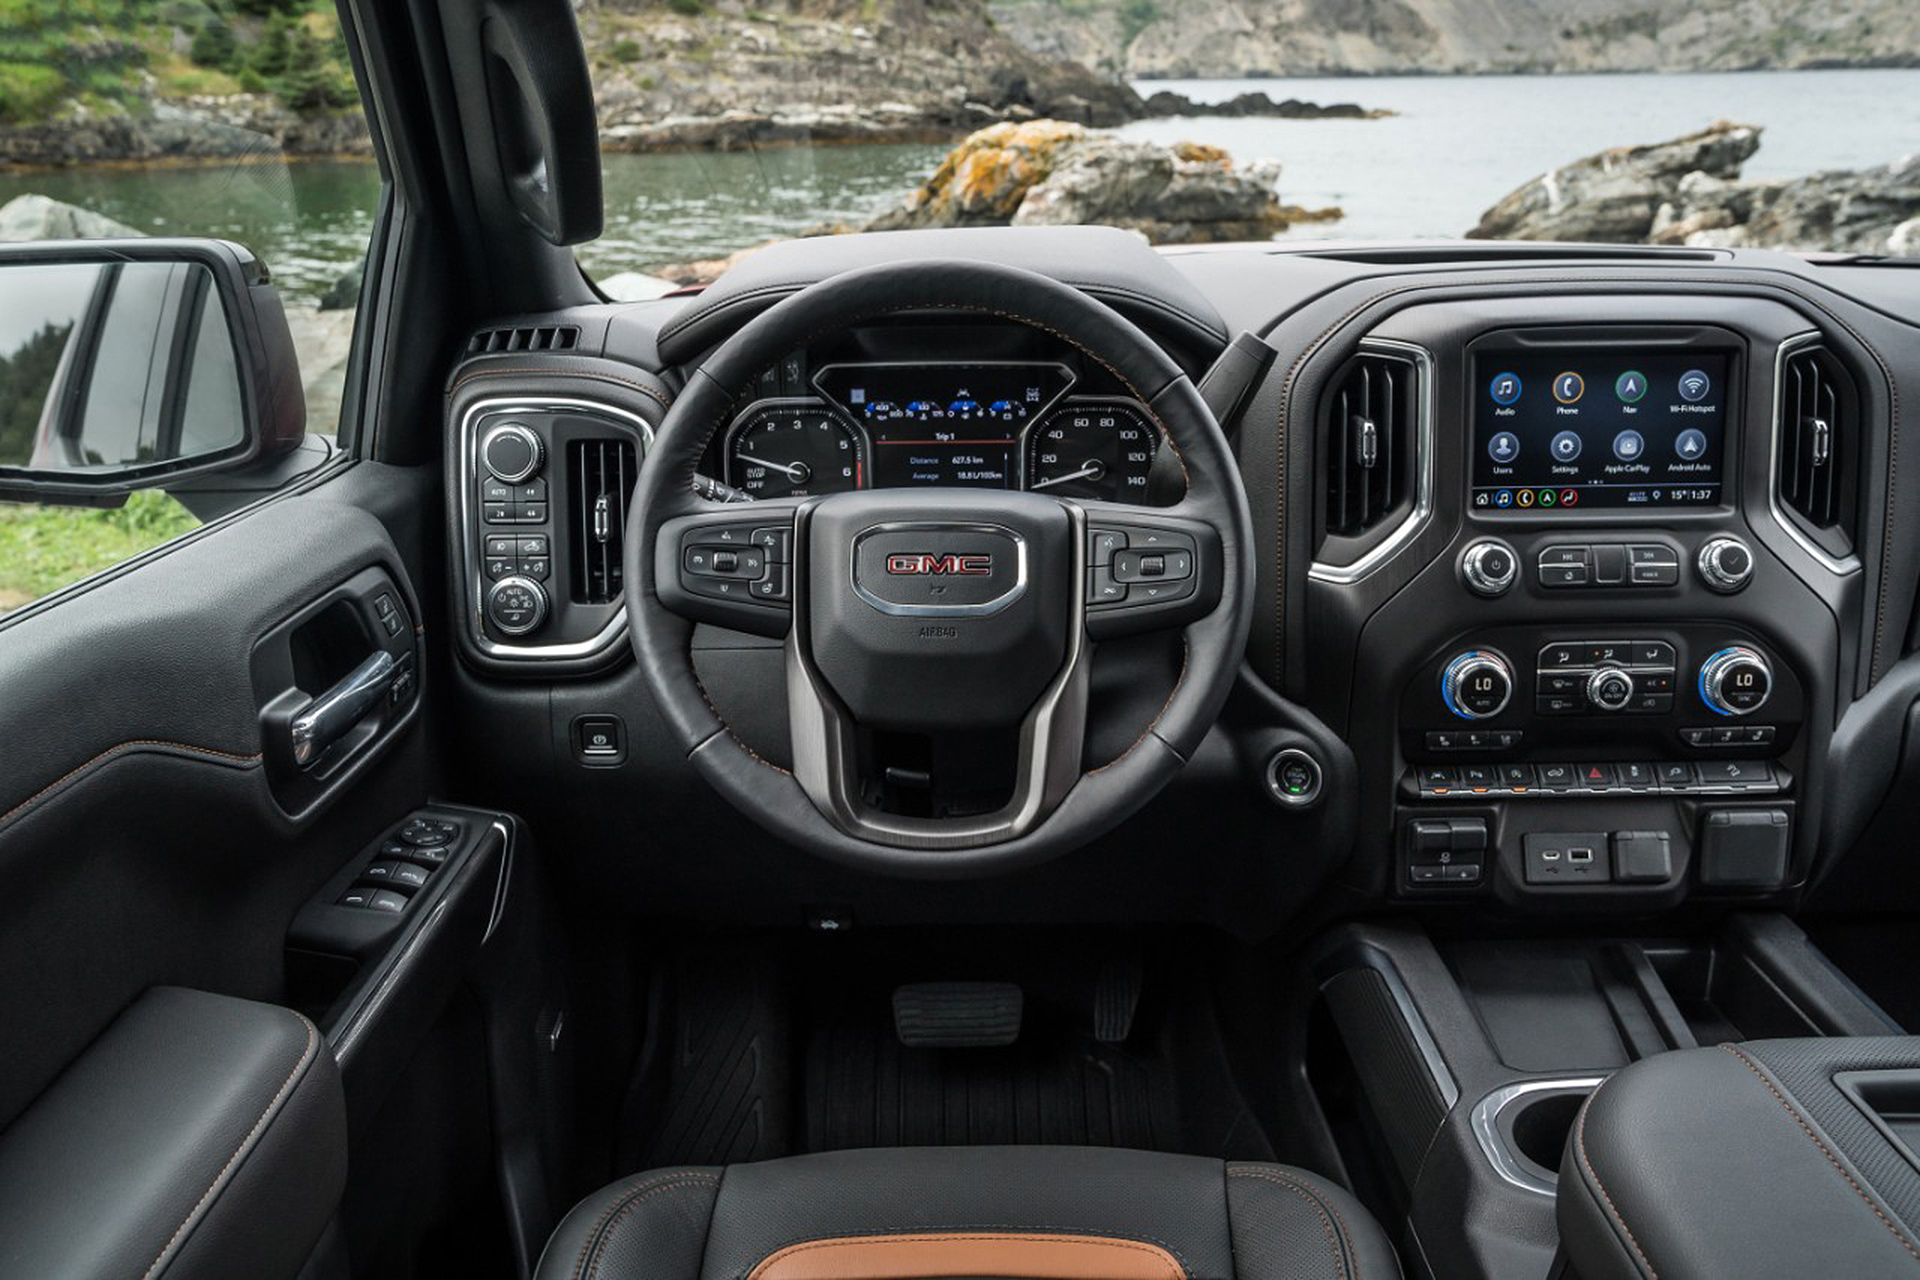 2019 GMC Sierra AT4 interior